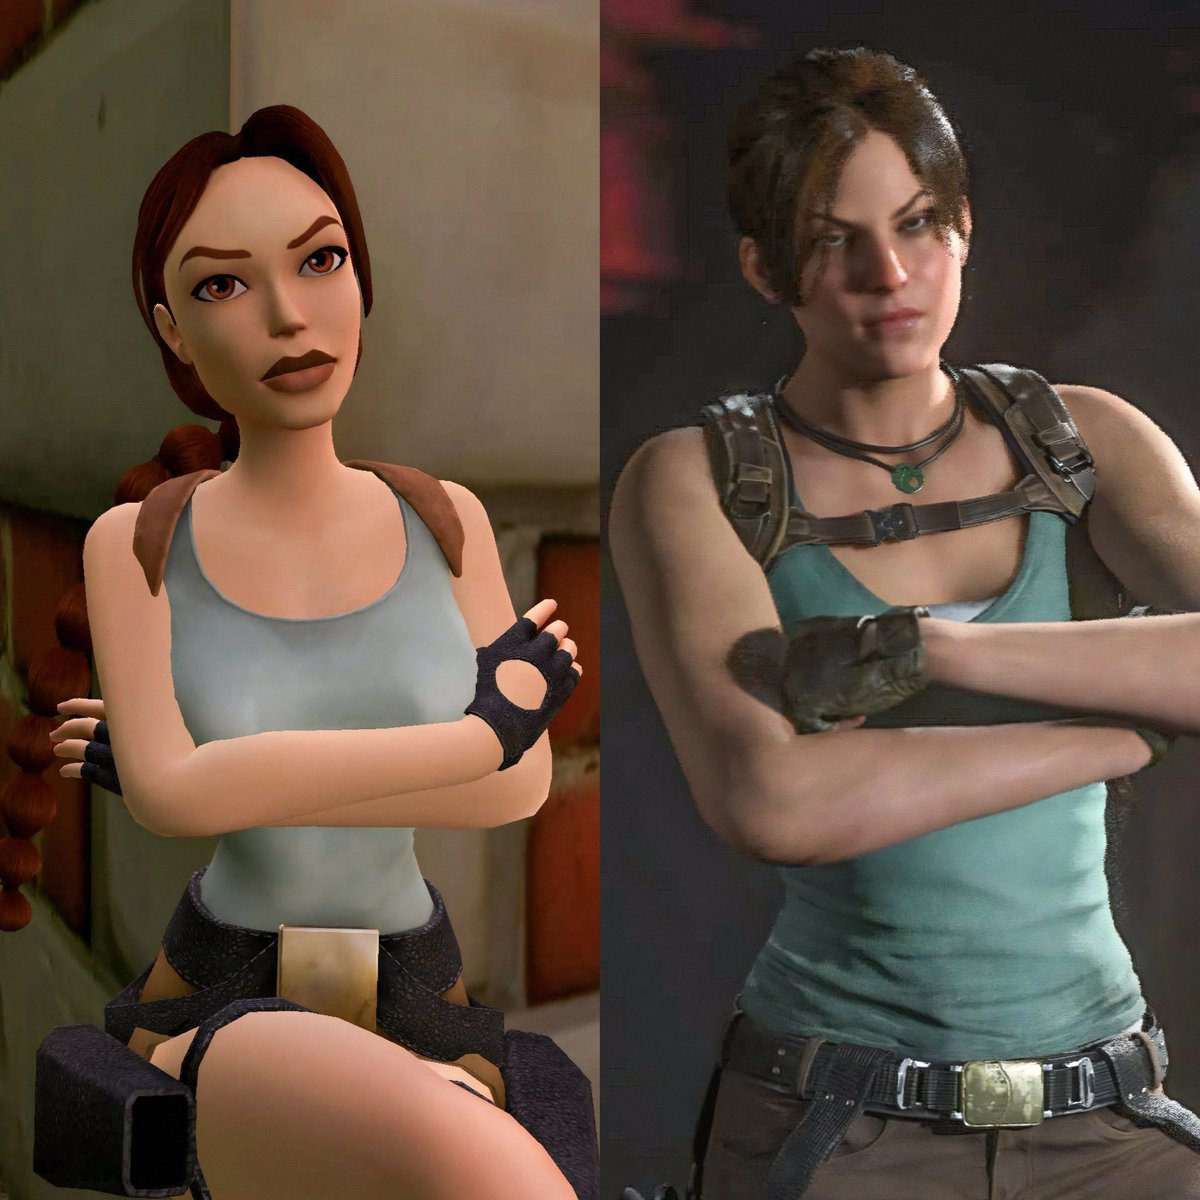 What the fuck happened to Lara Croft?